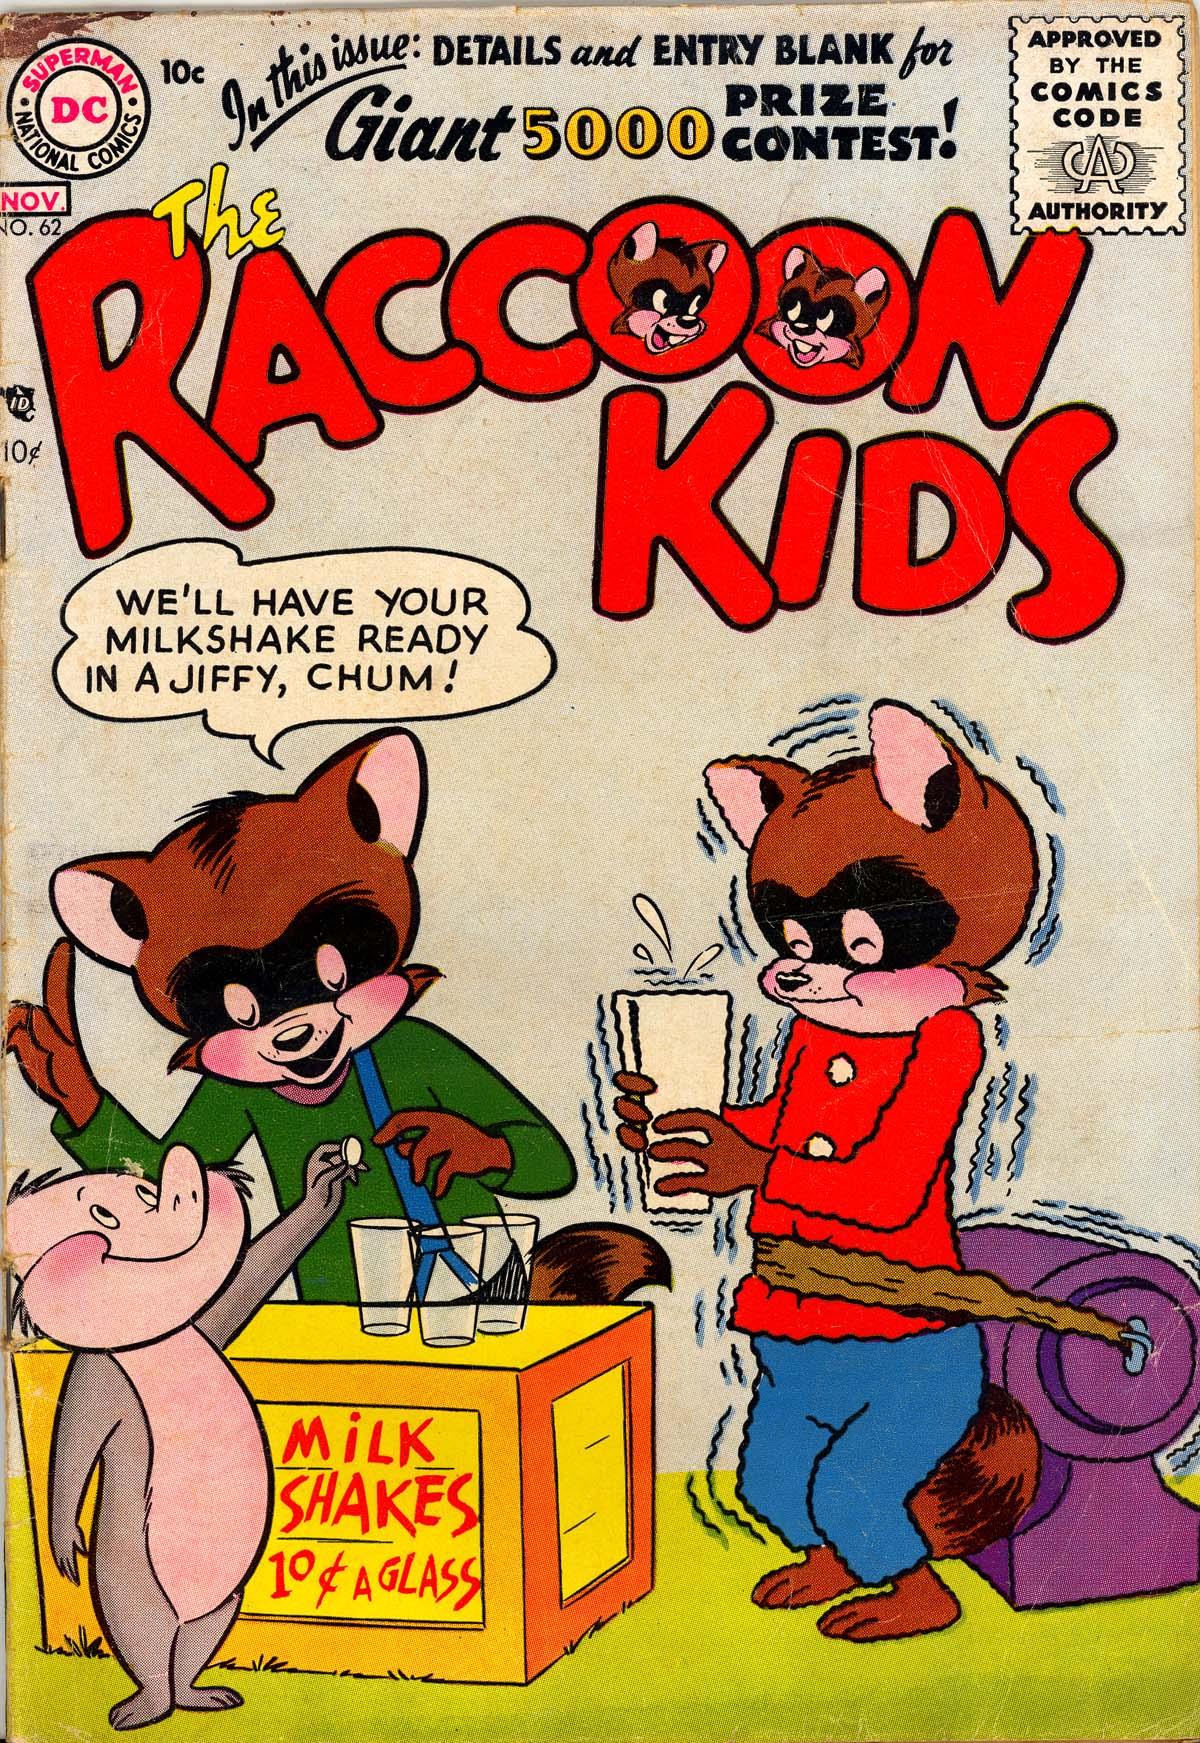 Raccoon Kids Vol. 1 #62